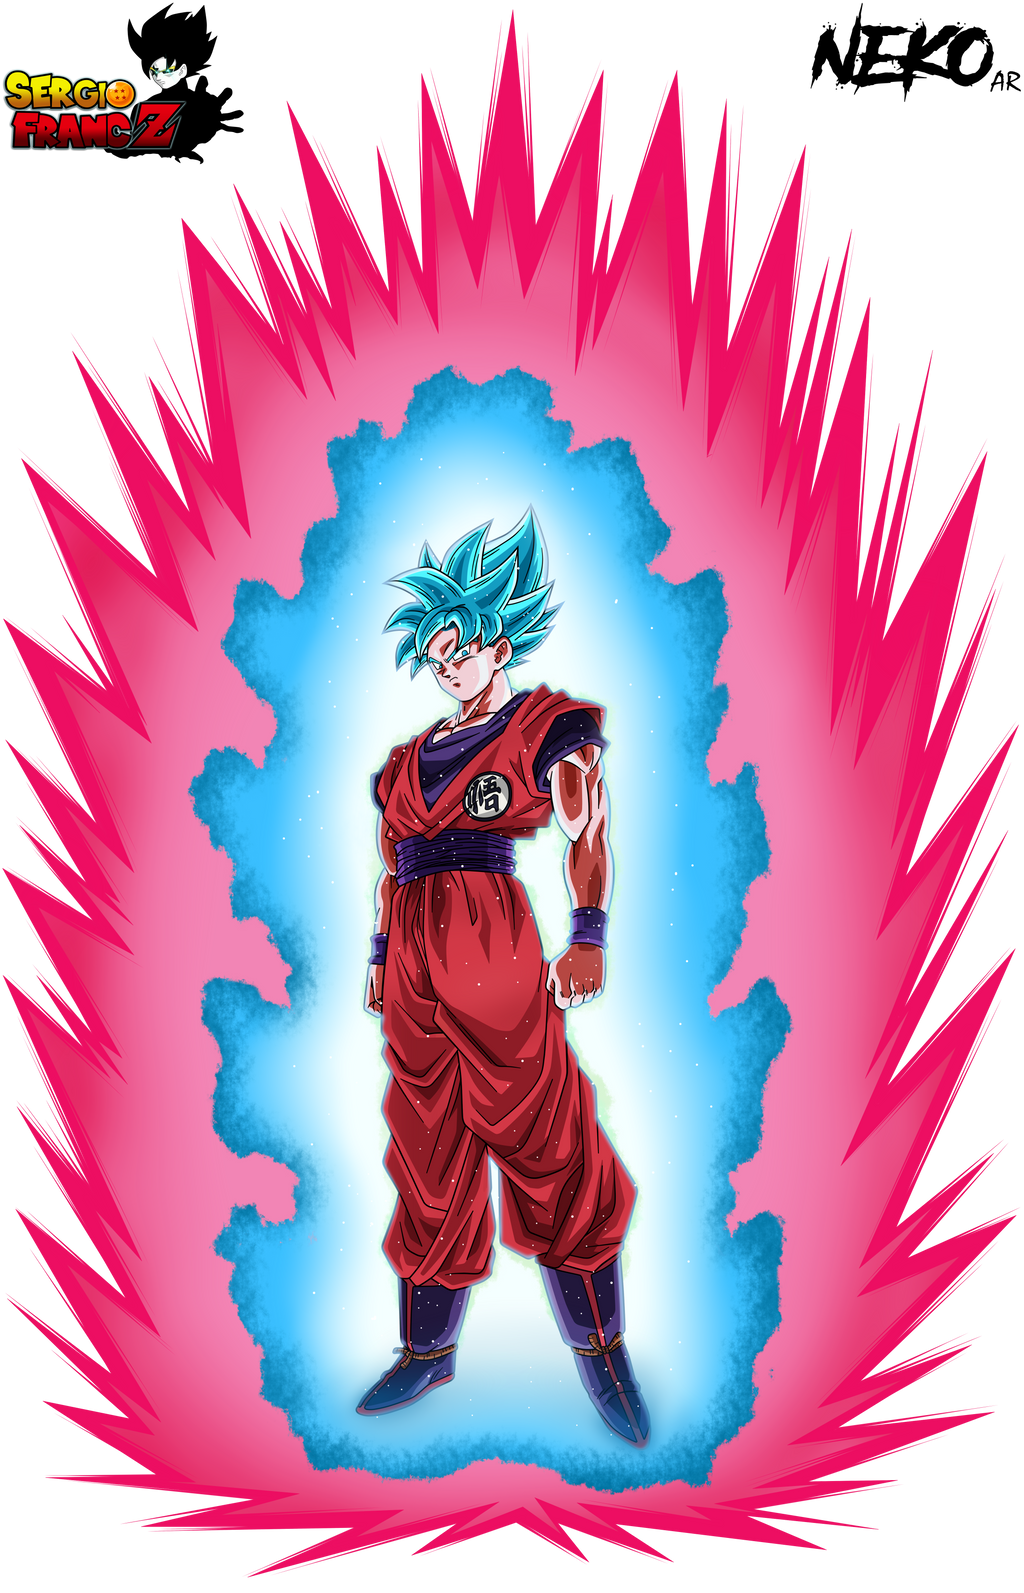 Goku SSJ Blue (costume z) kaioken by SergioFrancZ on DeviantArt